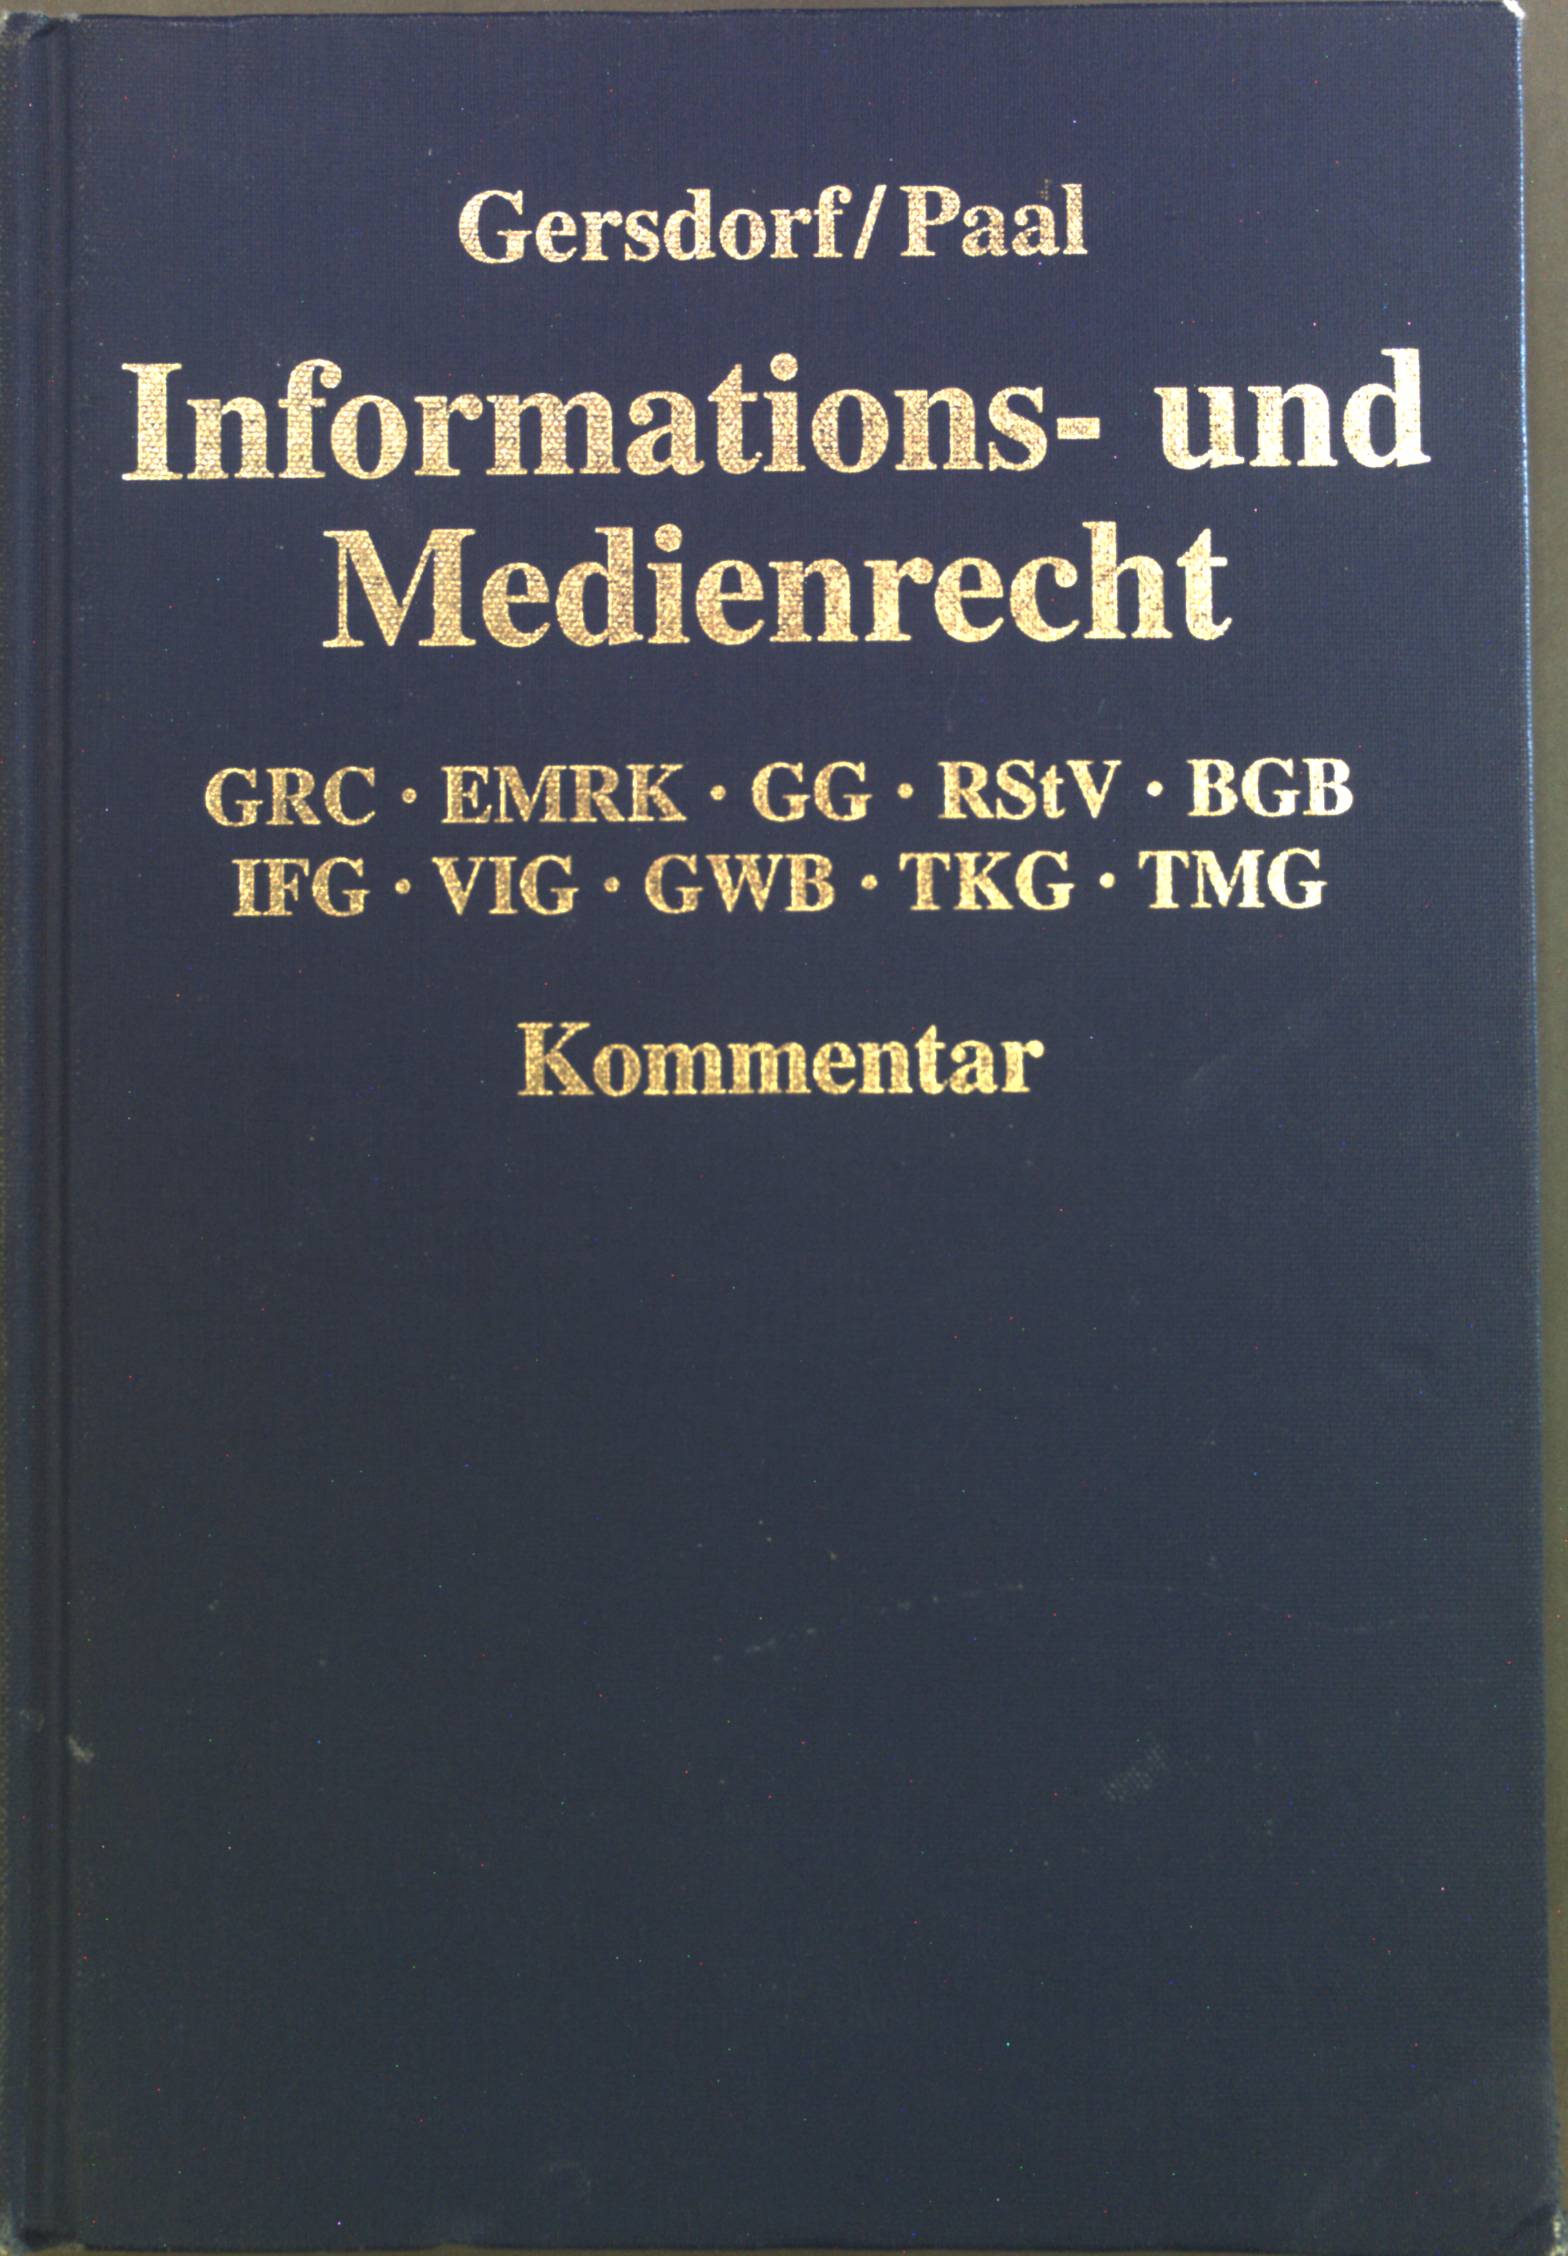 Informations- und Medienrecht : GRC, EMRK, GG, RStV, BGB, IFG, VIG, GWB, TKG, TMG ; Kommentar. - Gersdorf, Hubertus, Roland Bornemann Boris P. Paal u. a.